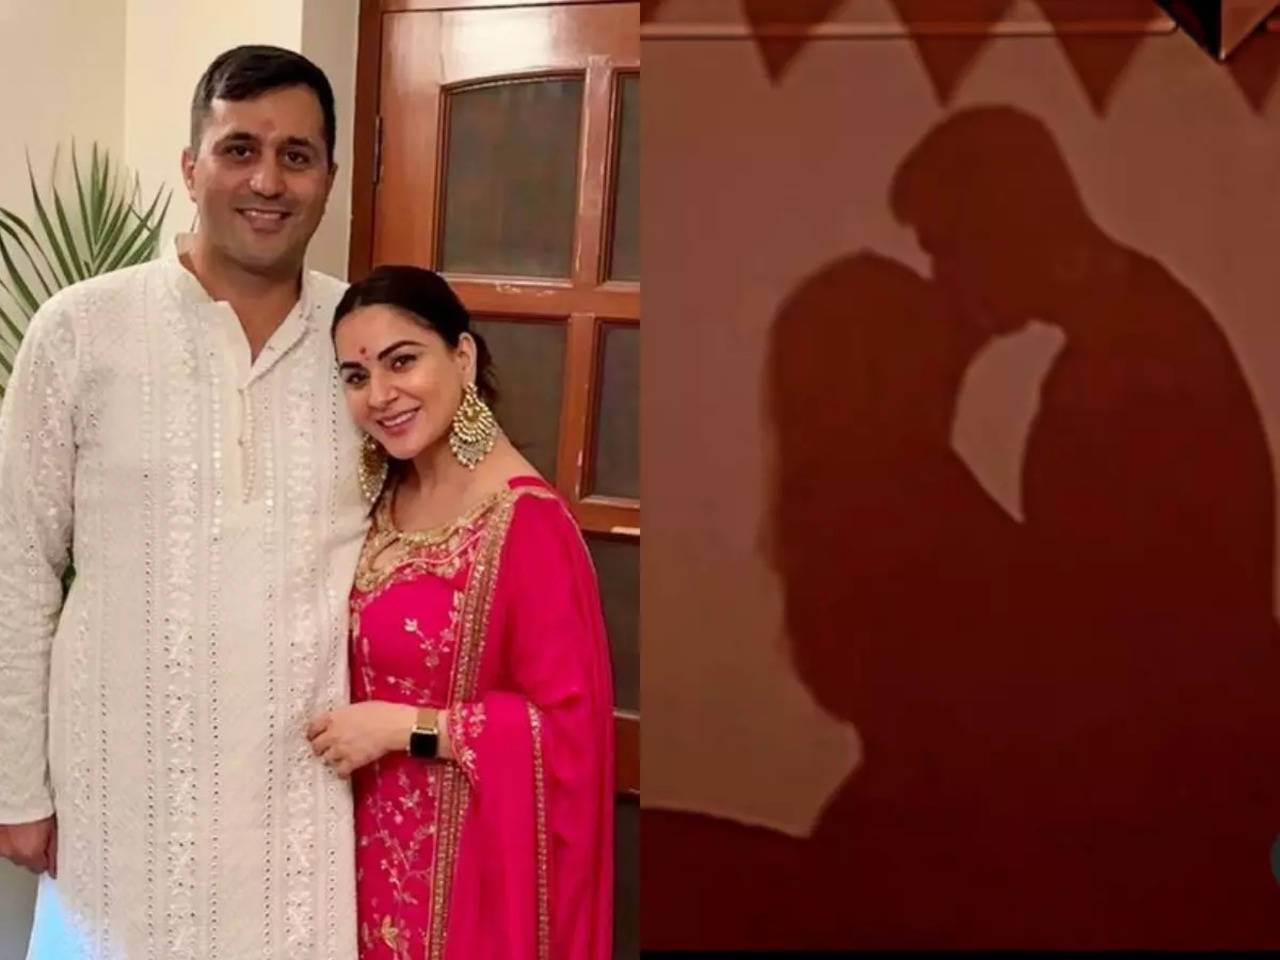 Watch Shraddha Aryas romantic kiss video with husband Rahul Nagal on their first wedding anniversary